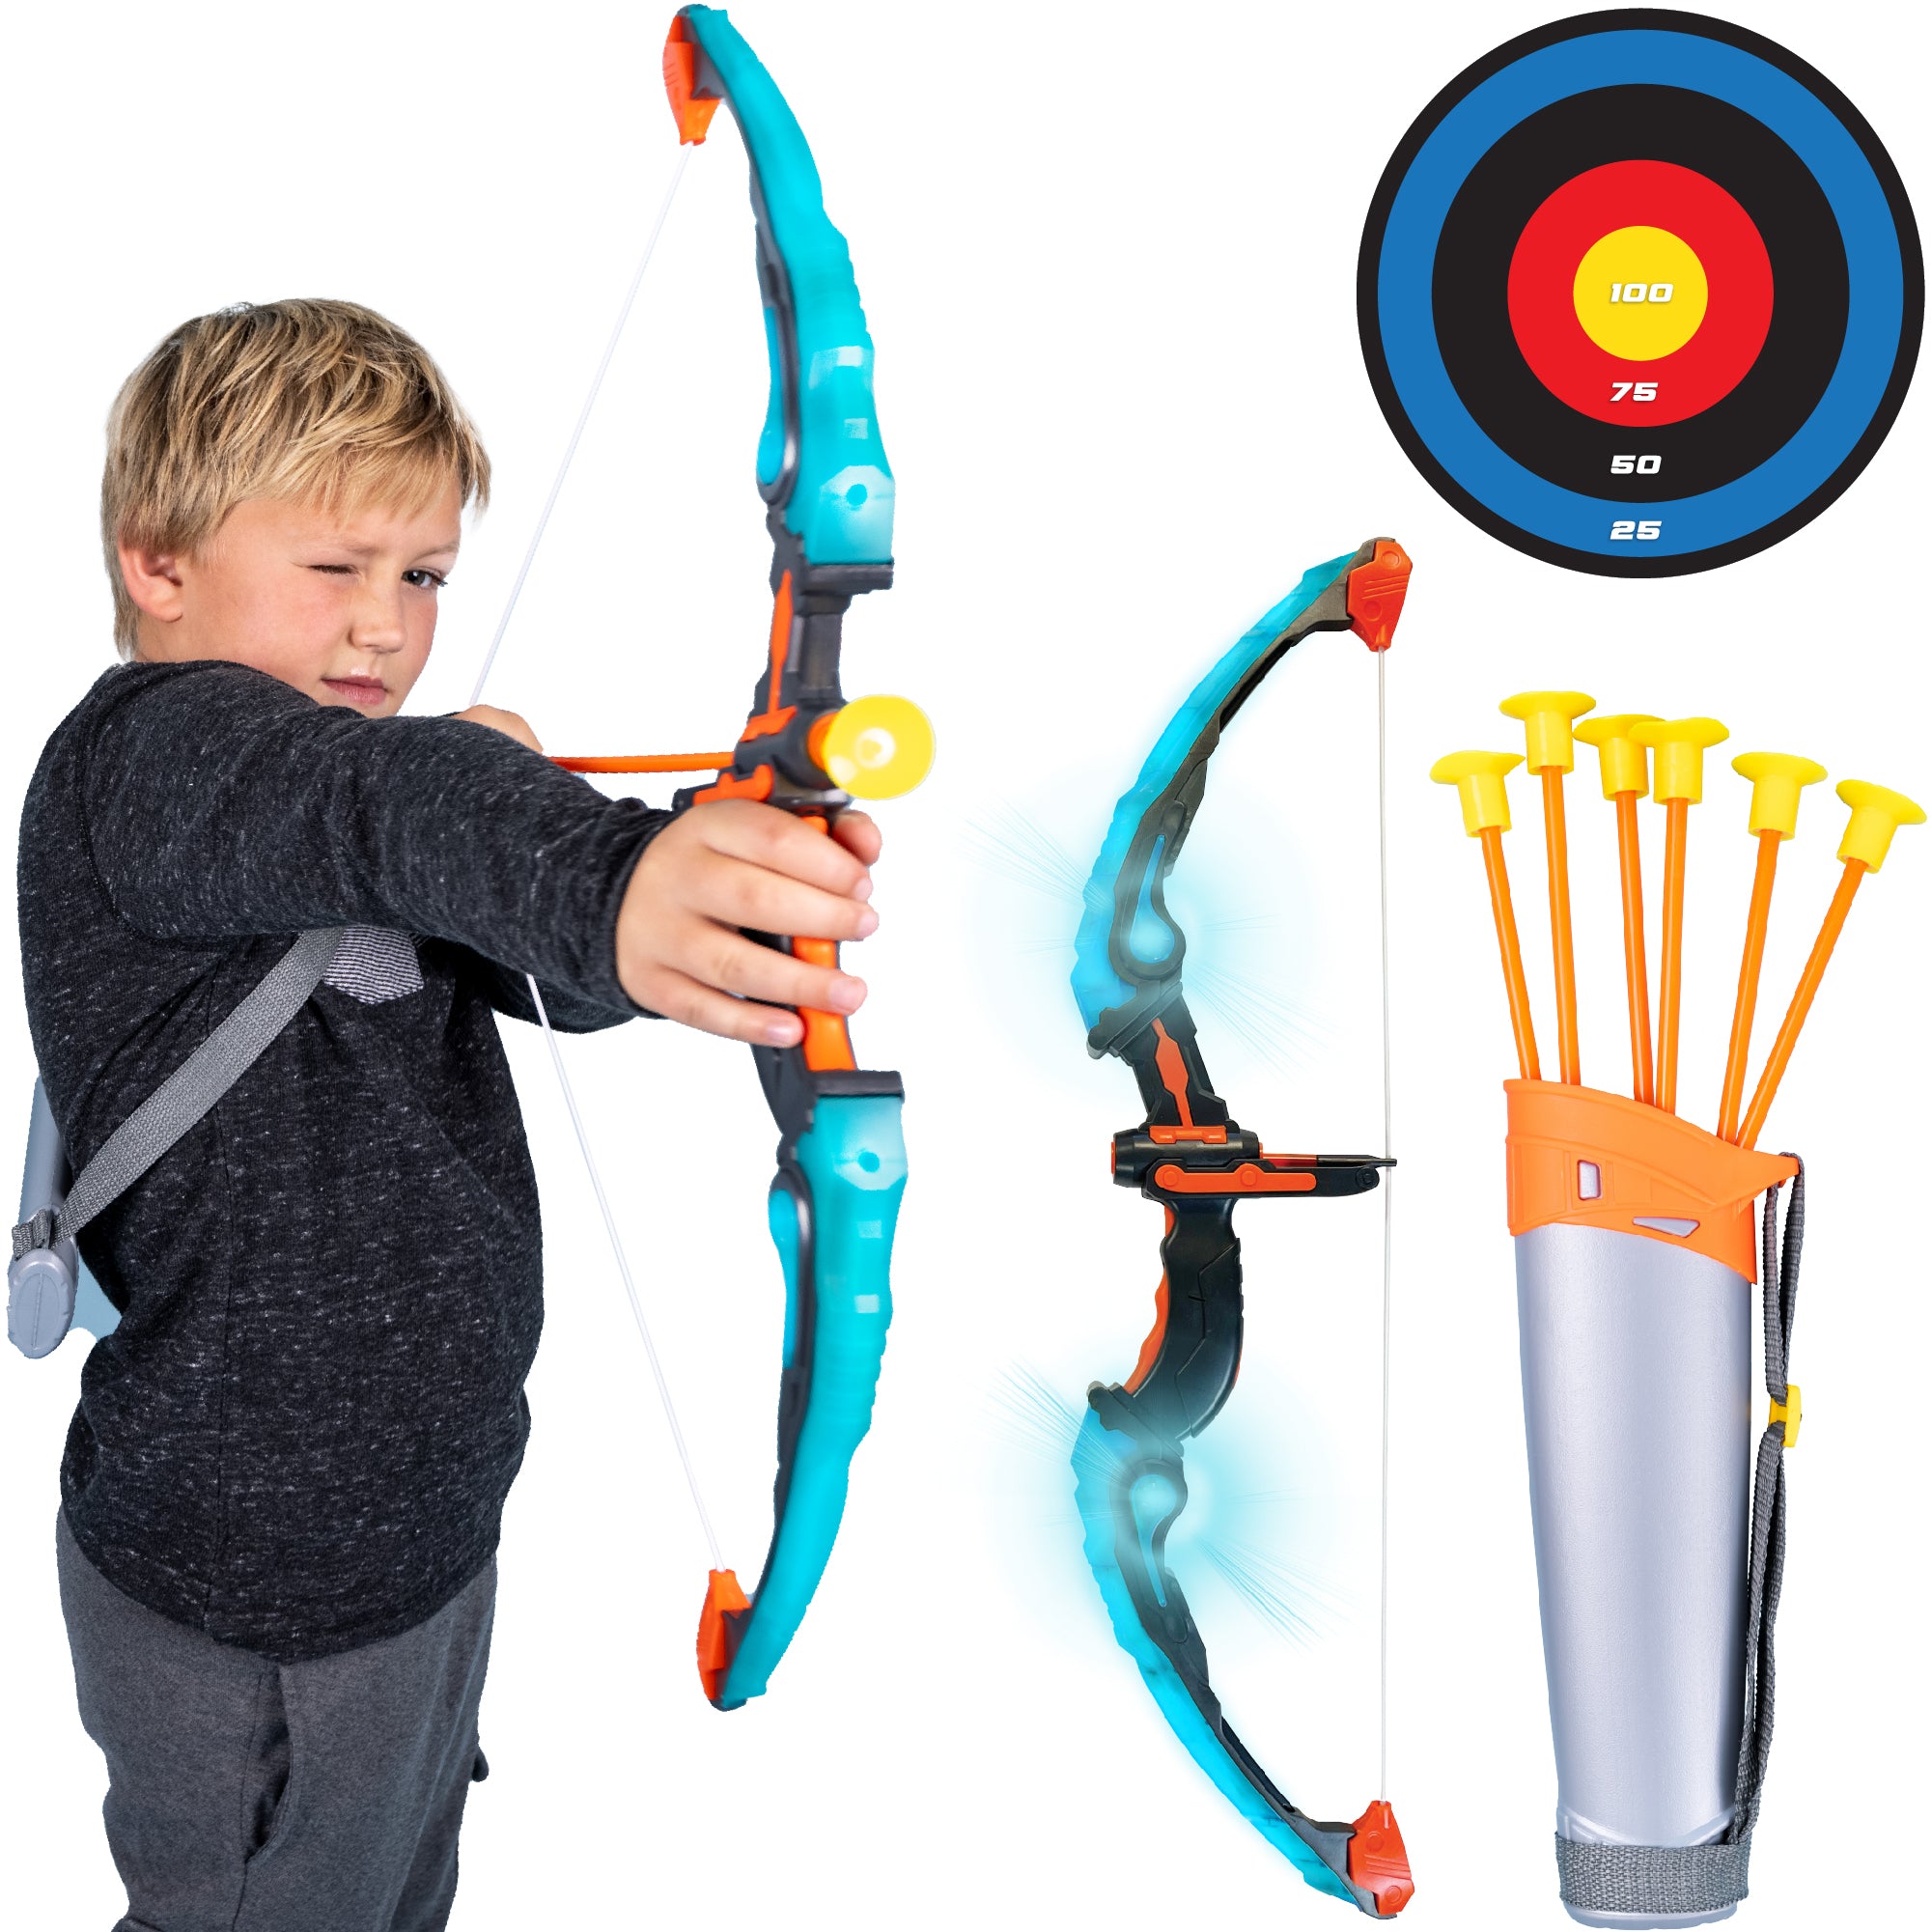 LED Bow and Arrow Archery Set